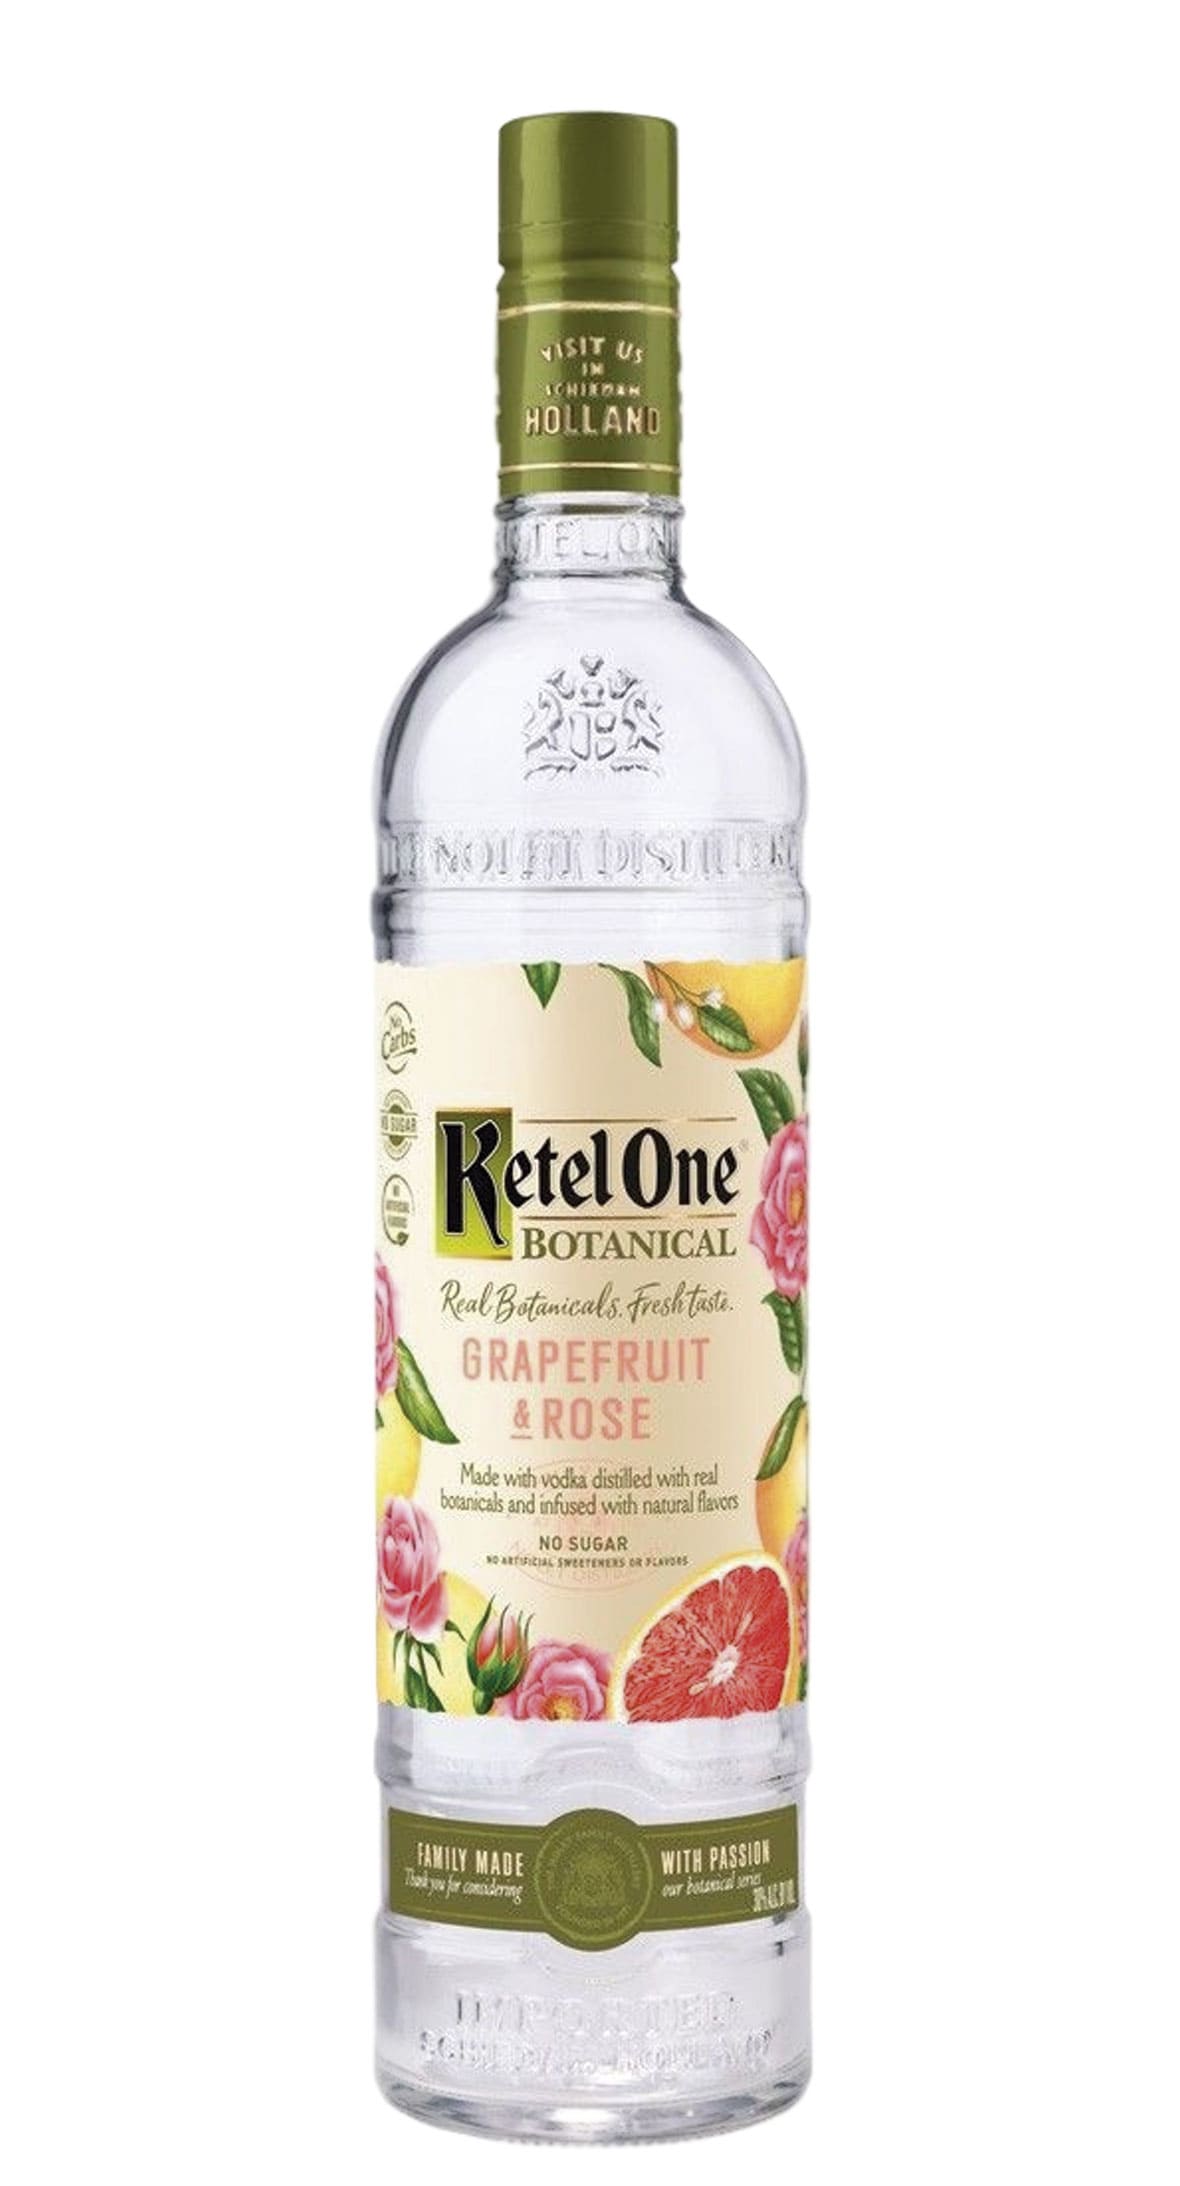 https://www.imigrantesbebidas.com.br/bebida/images/products/full/62023-vodka-ketel-one-grapefruit-e-rose-750ml.jpg